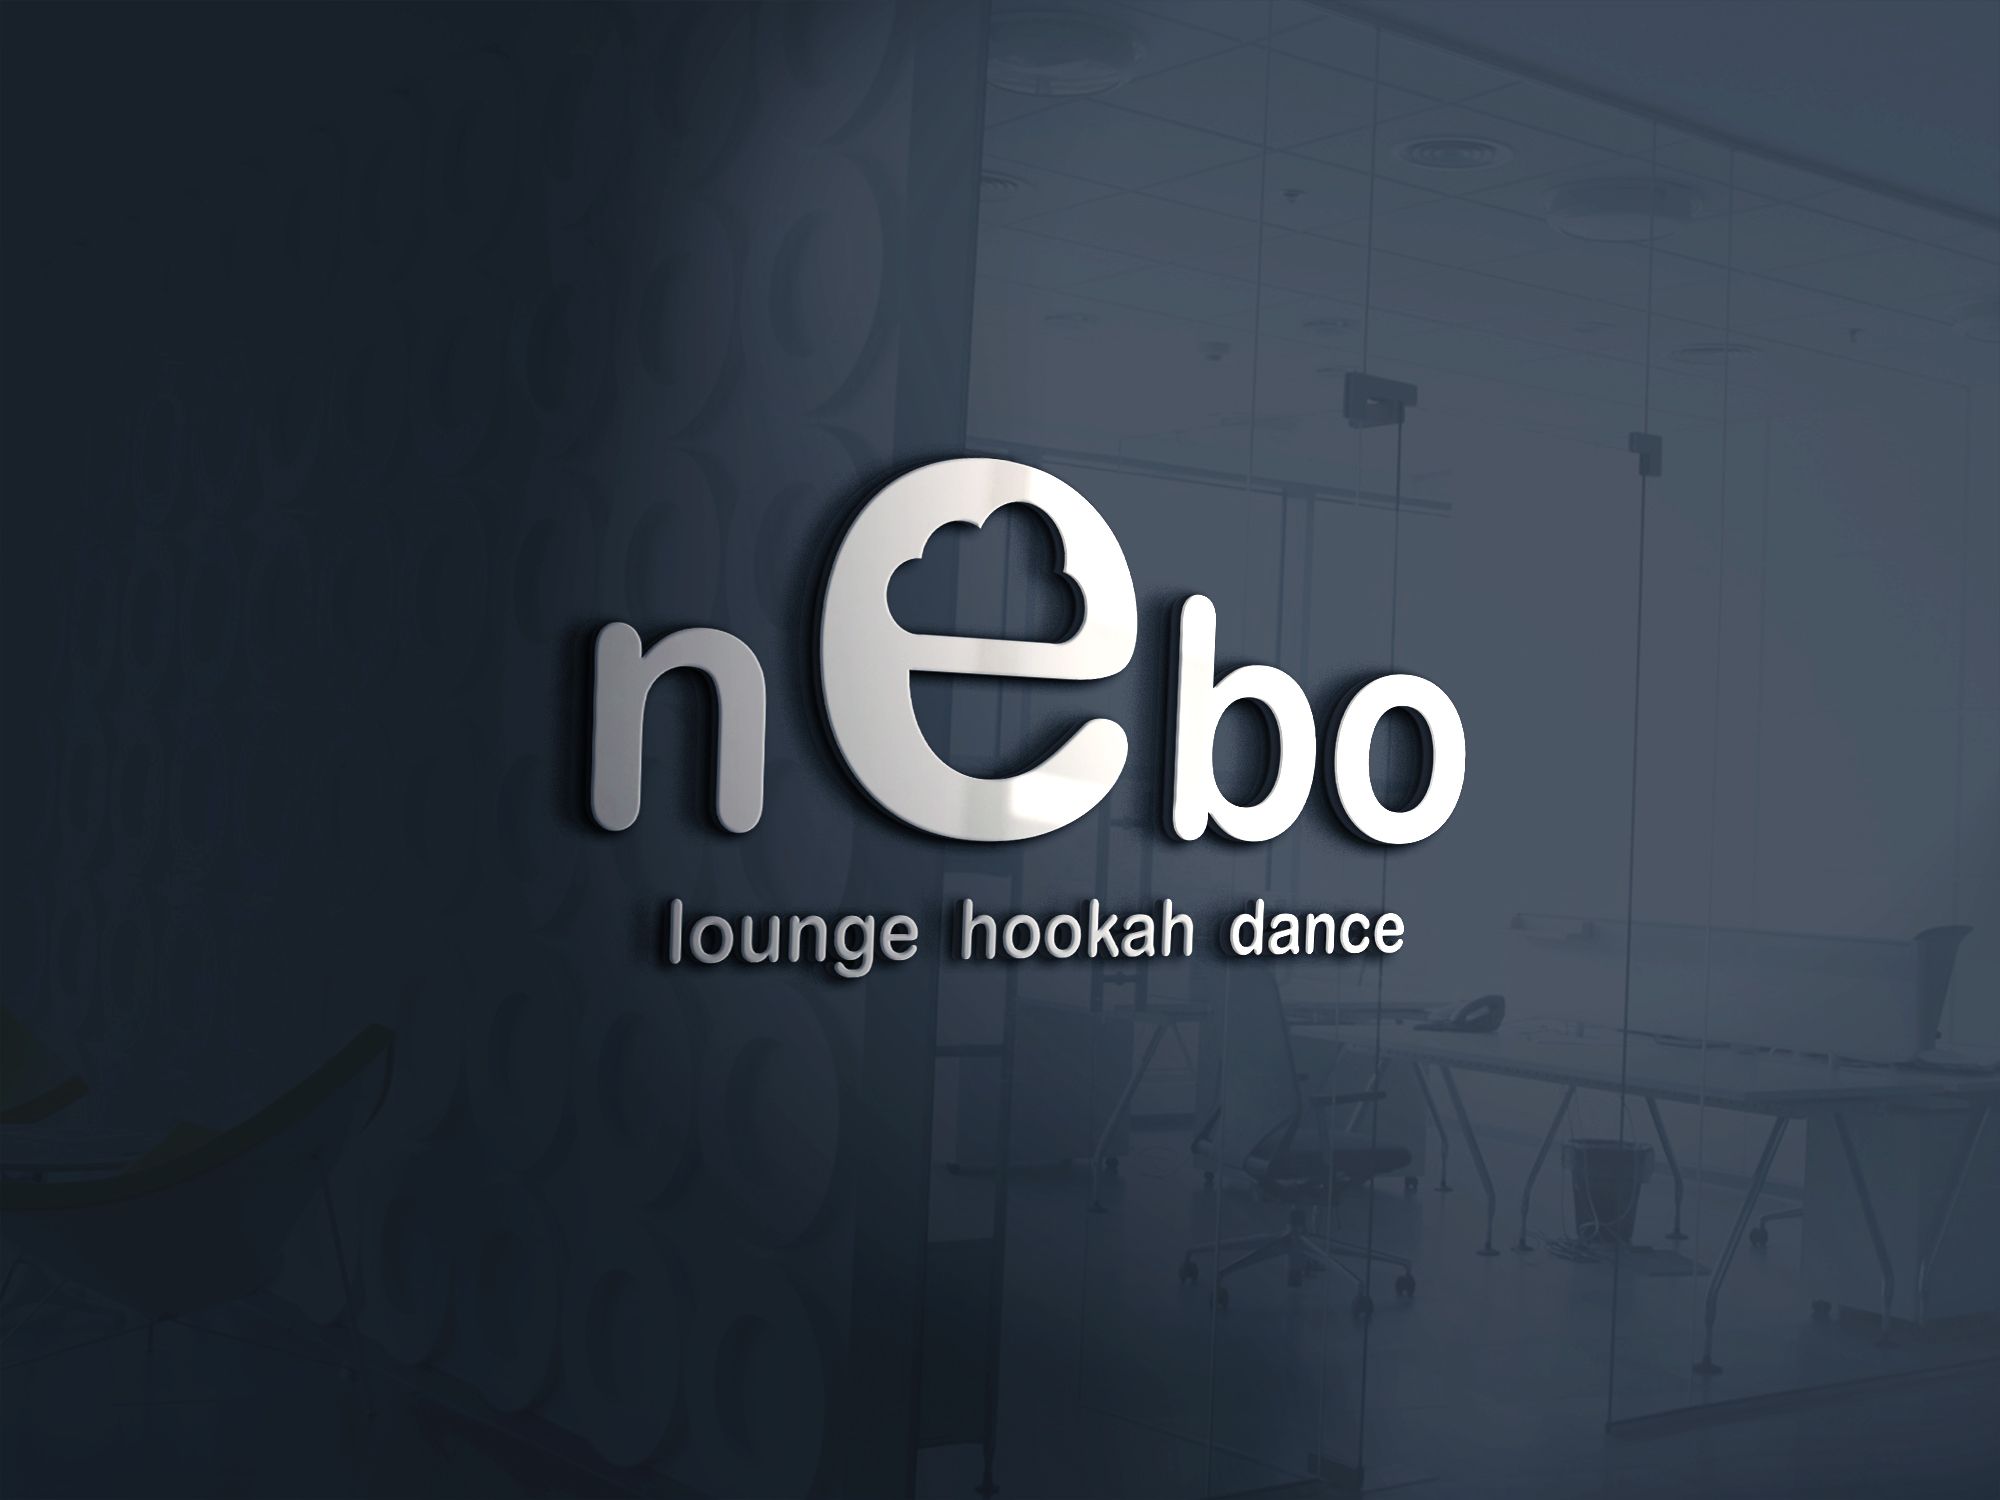 Логотип для Nebo - дизайнер serz4868